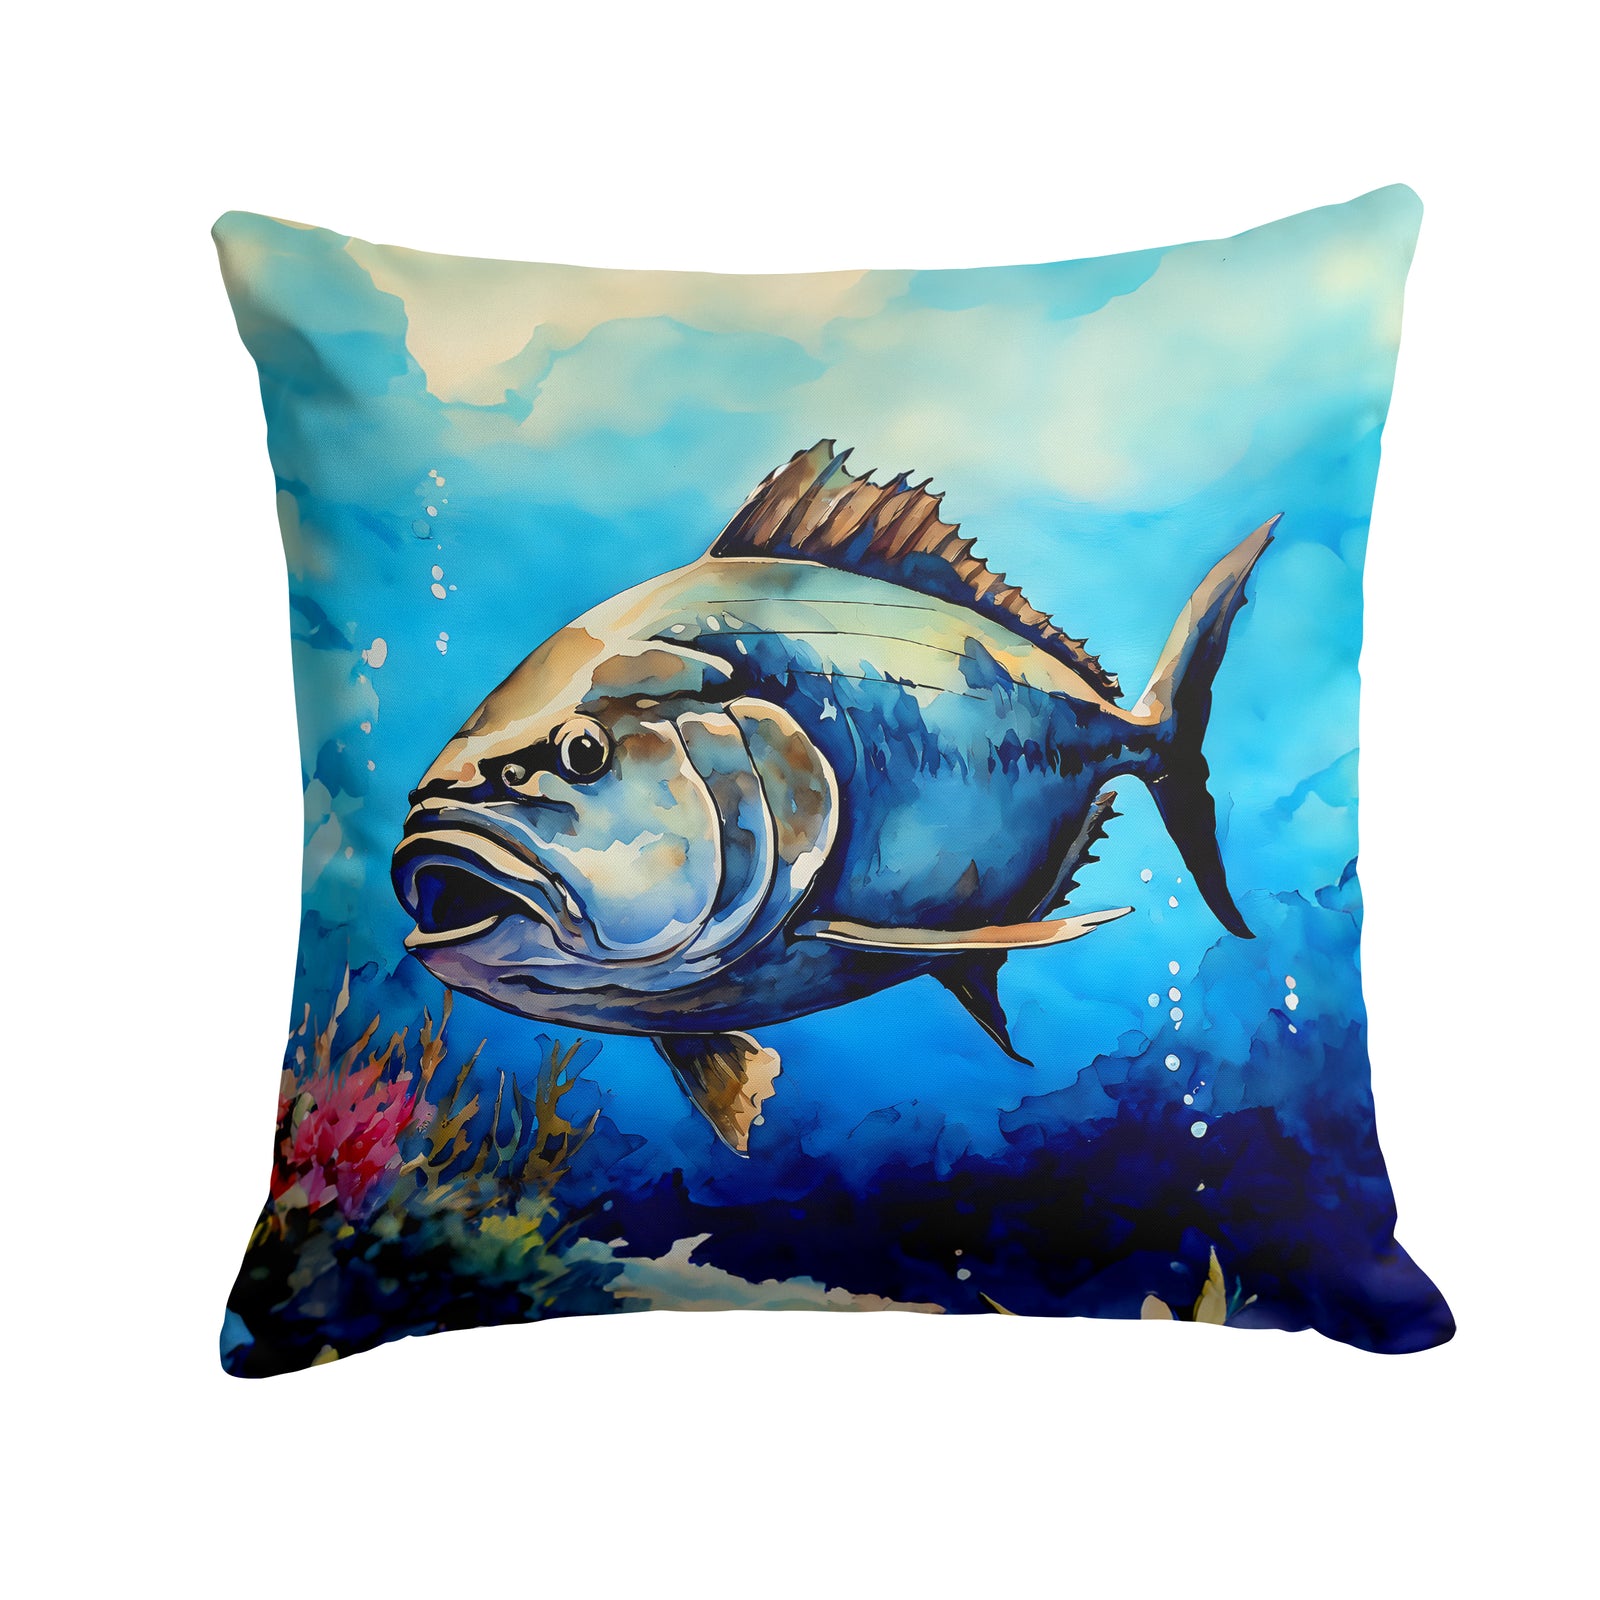 Buy this Bluefin Tuna Throw Pillow